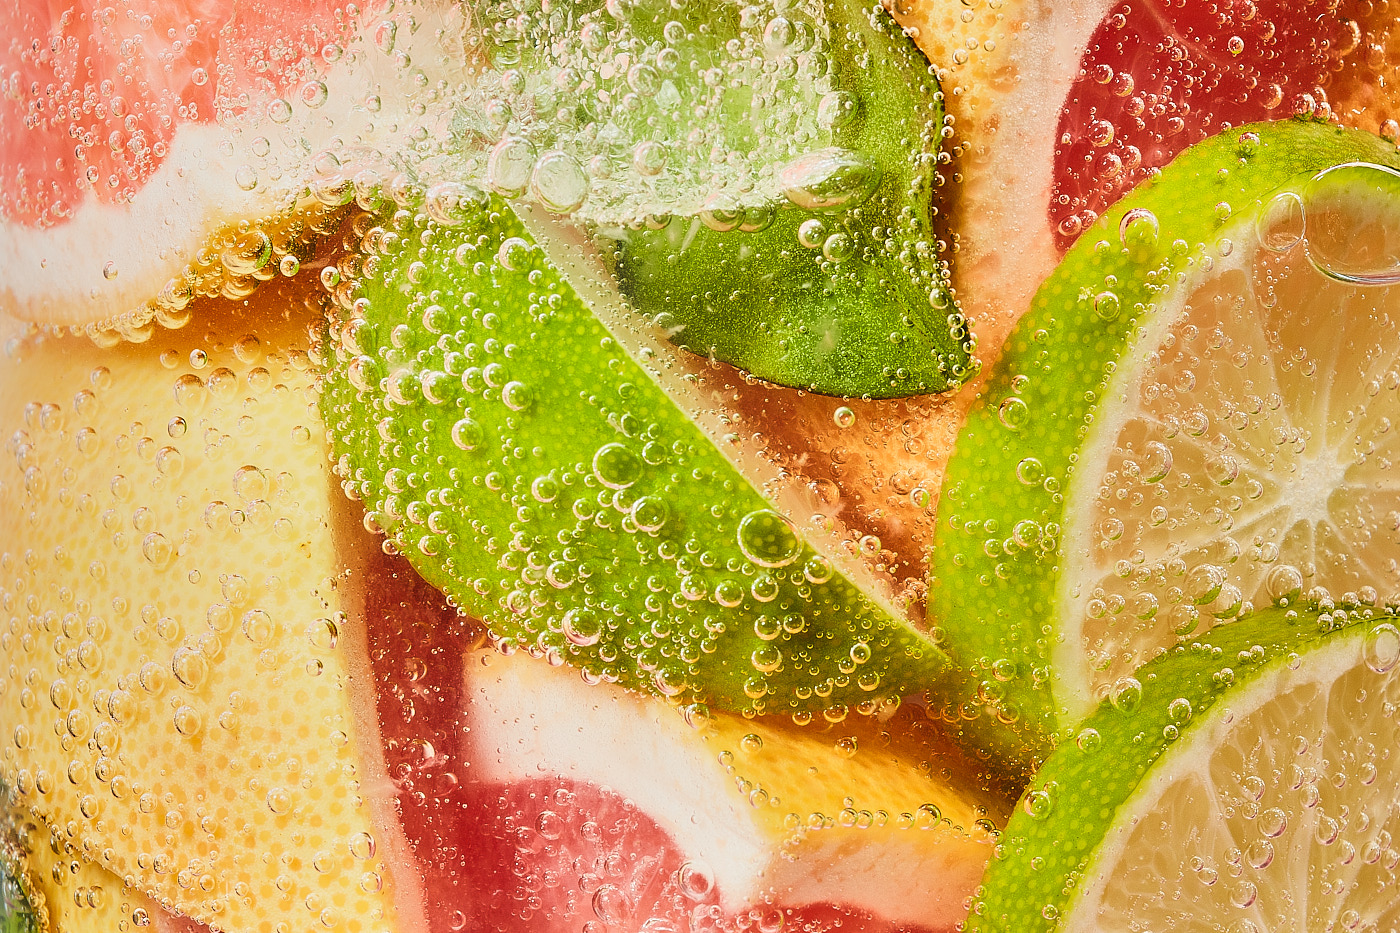 Drinks Photography - Macro of citrus fruit in liquid